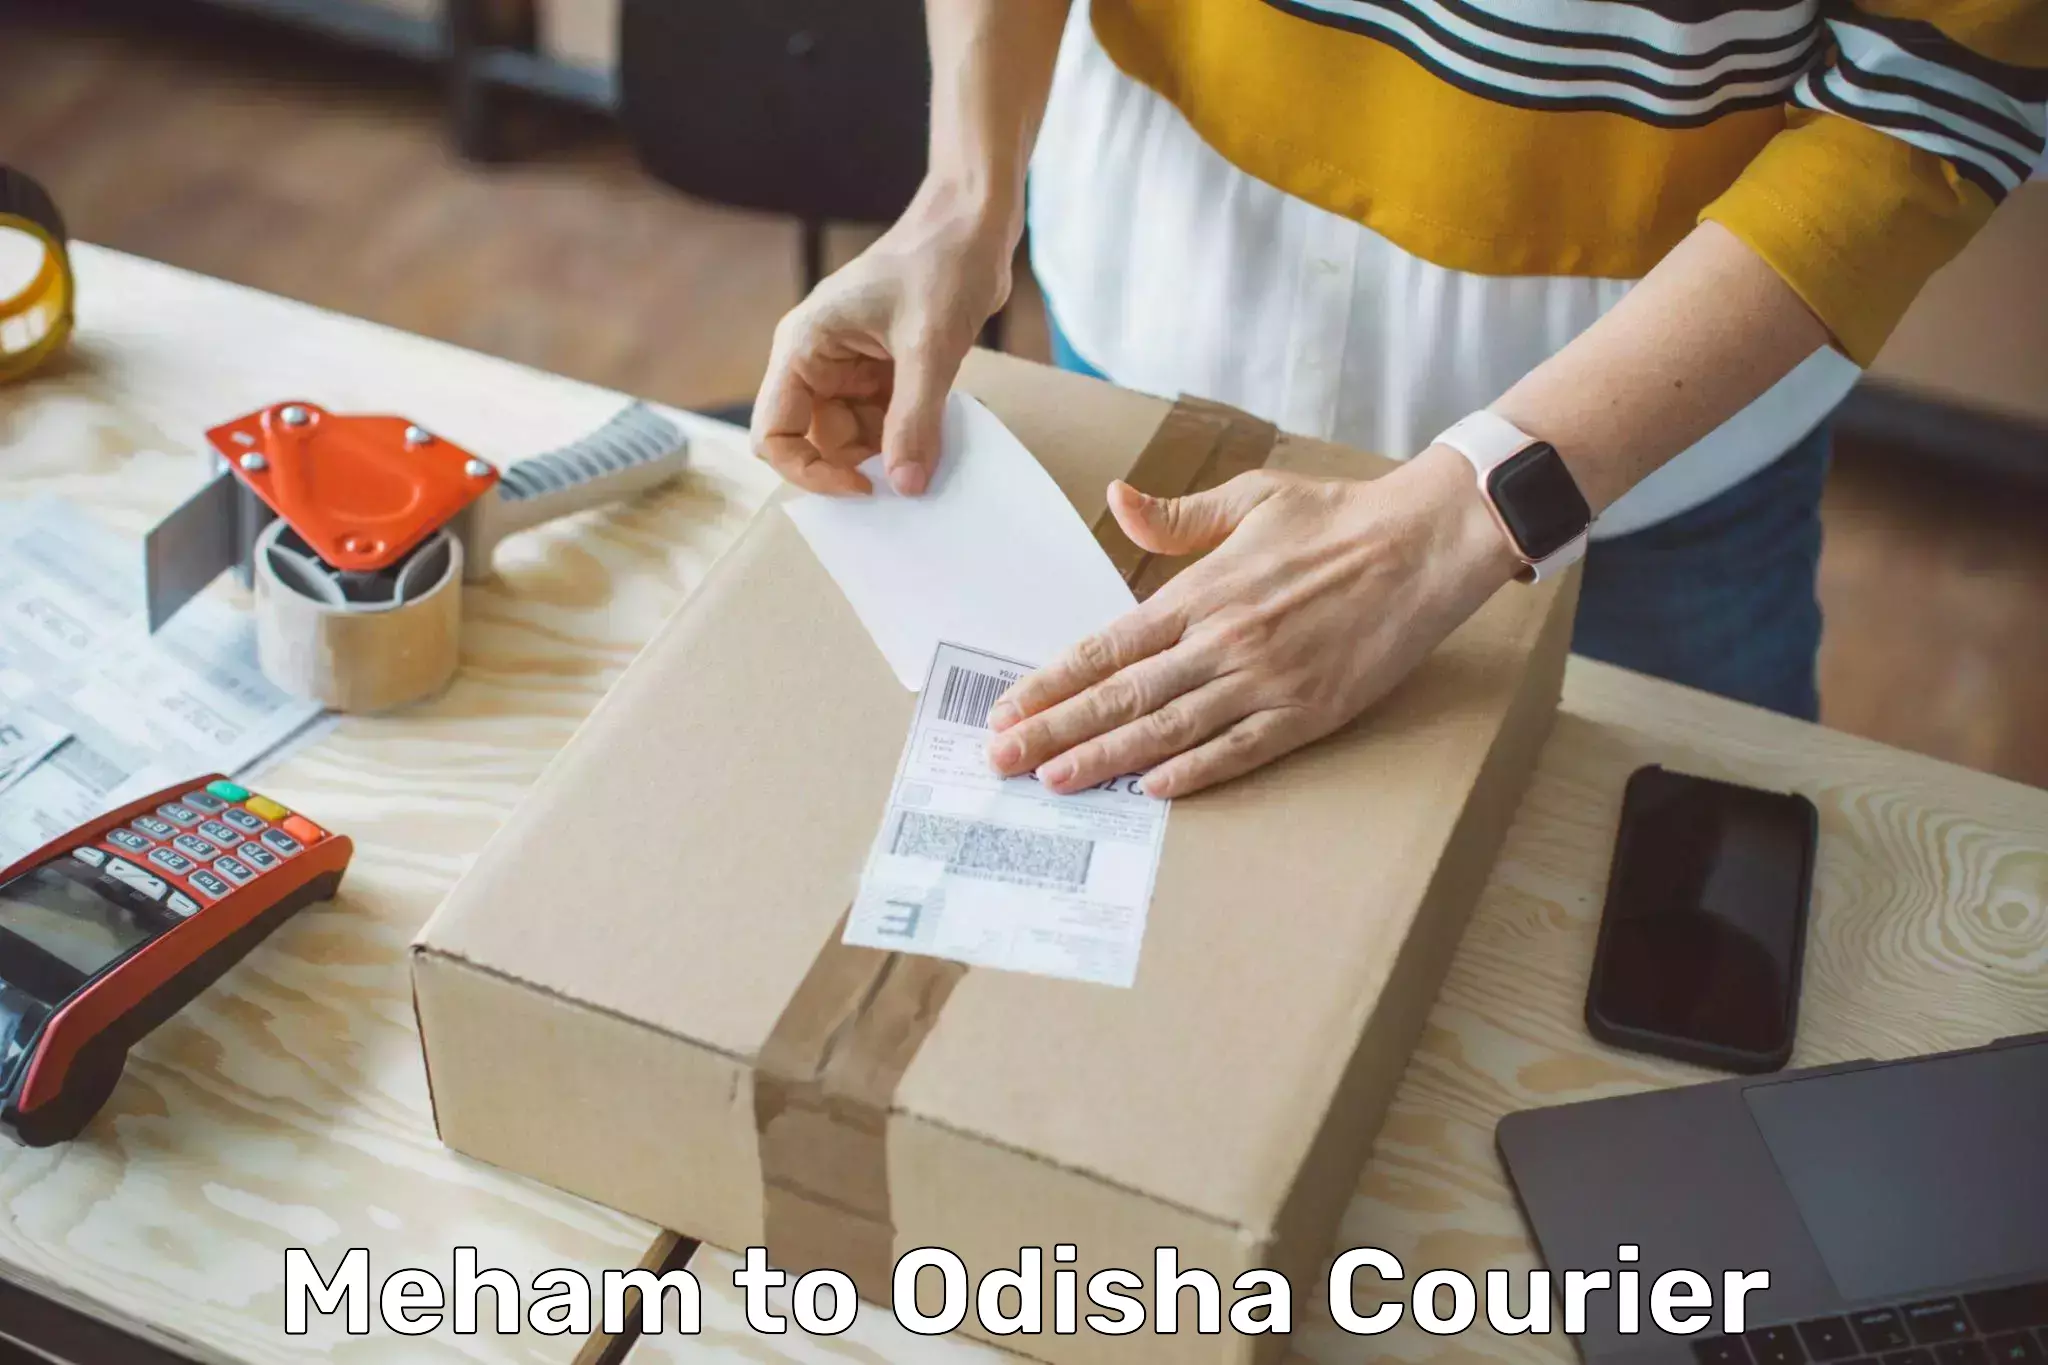 Quality courier services Meham to Odisha